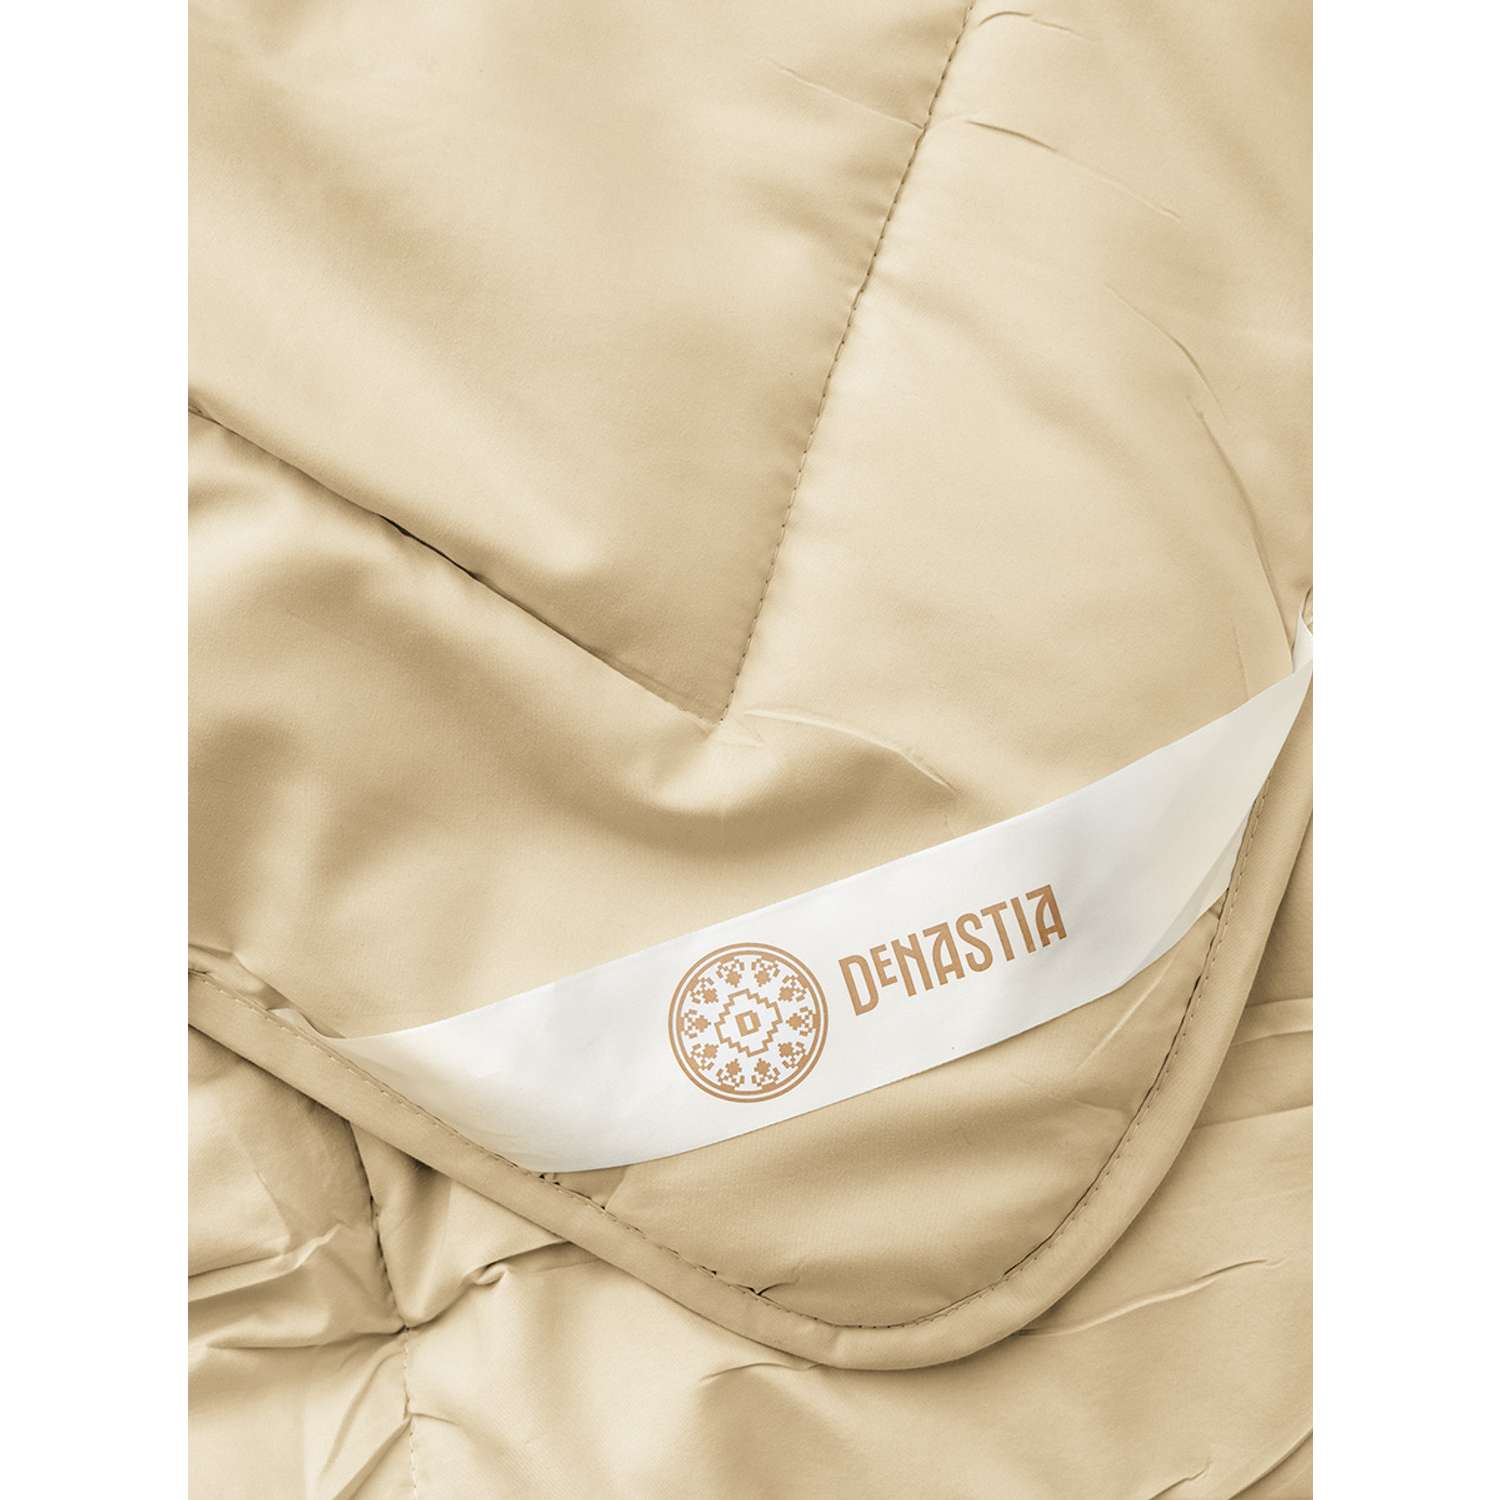 Одеяло/покрывало DeNASTIA 140x205 см желтый R020010 - фото 4